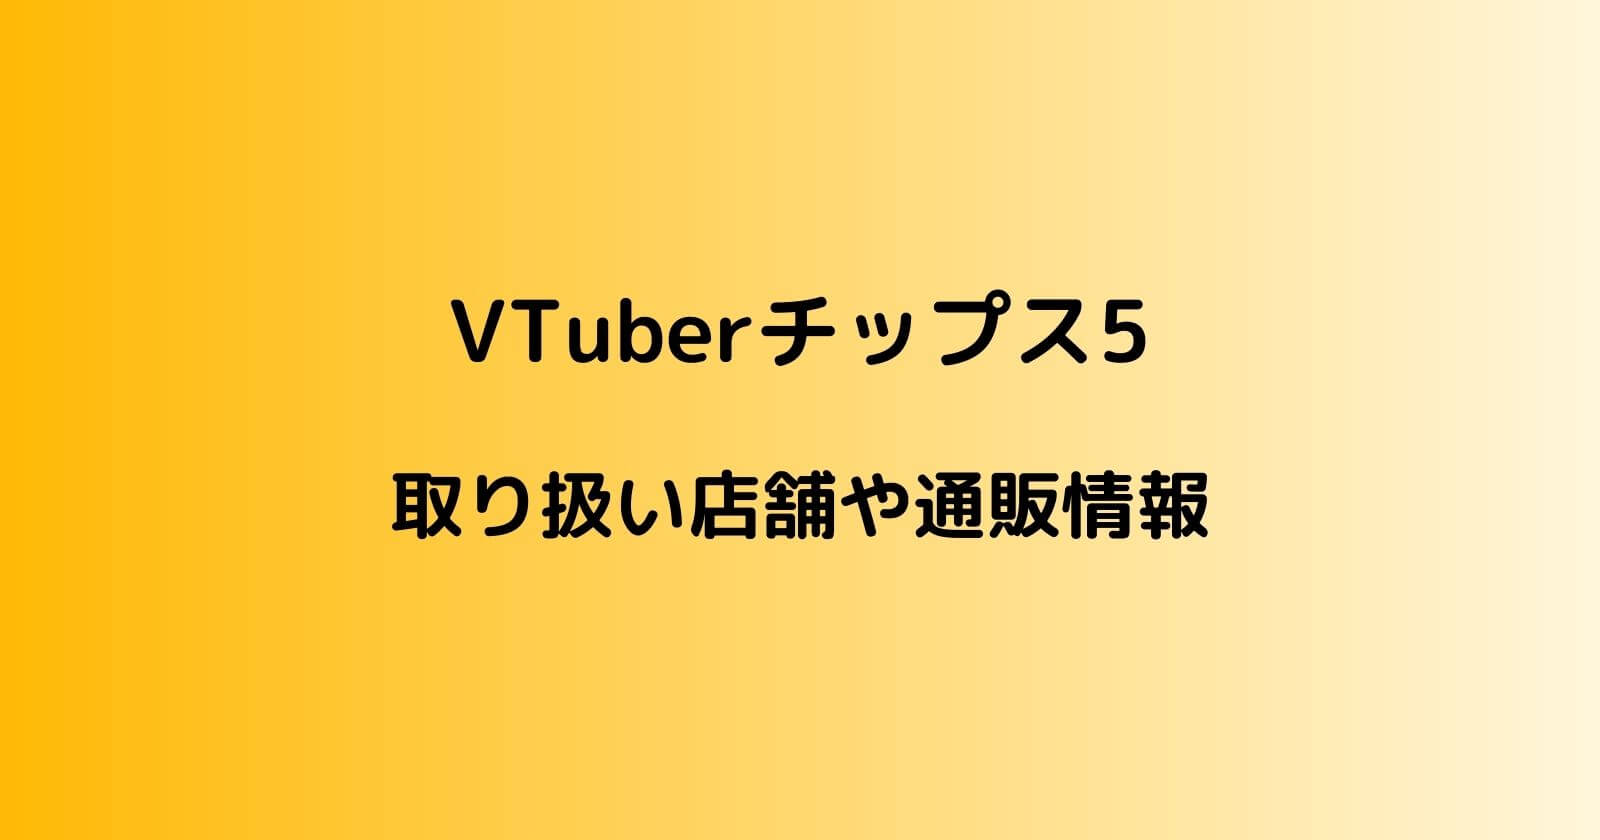 VTuberチップス5が売ってるコンビニ販売店や通販情報